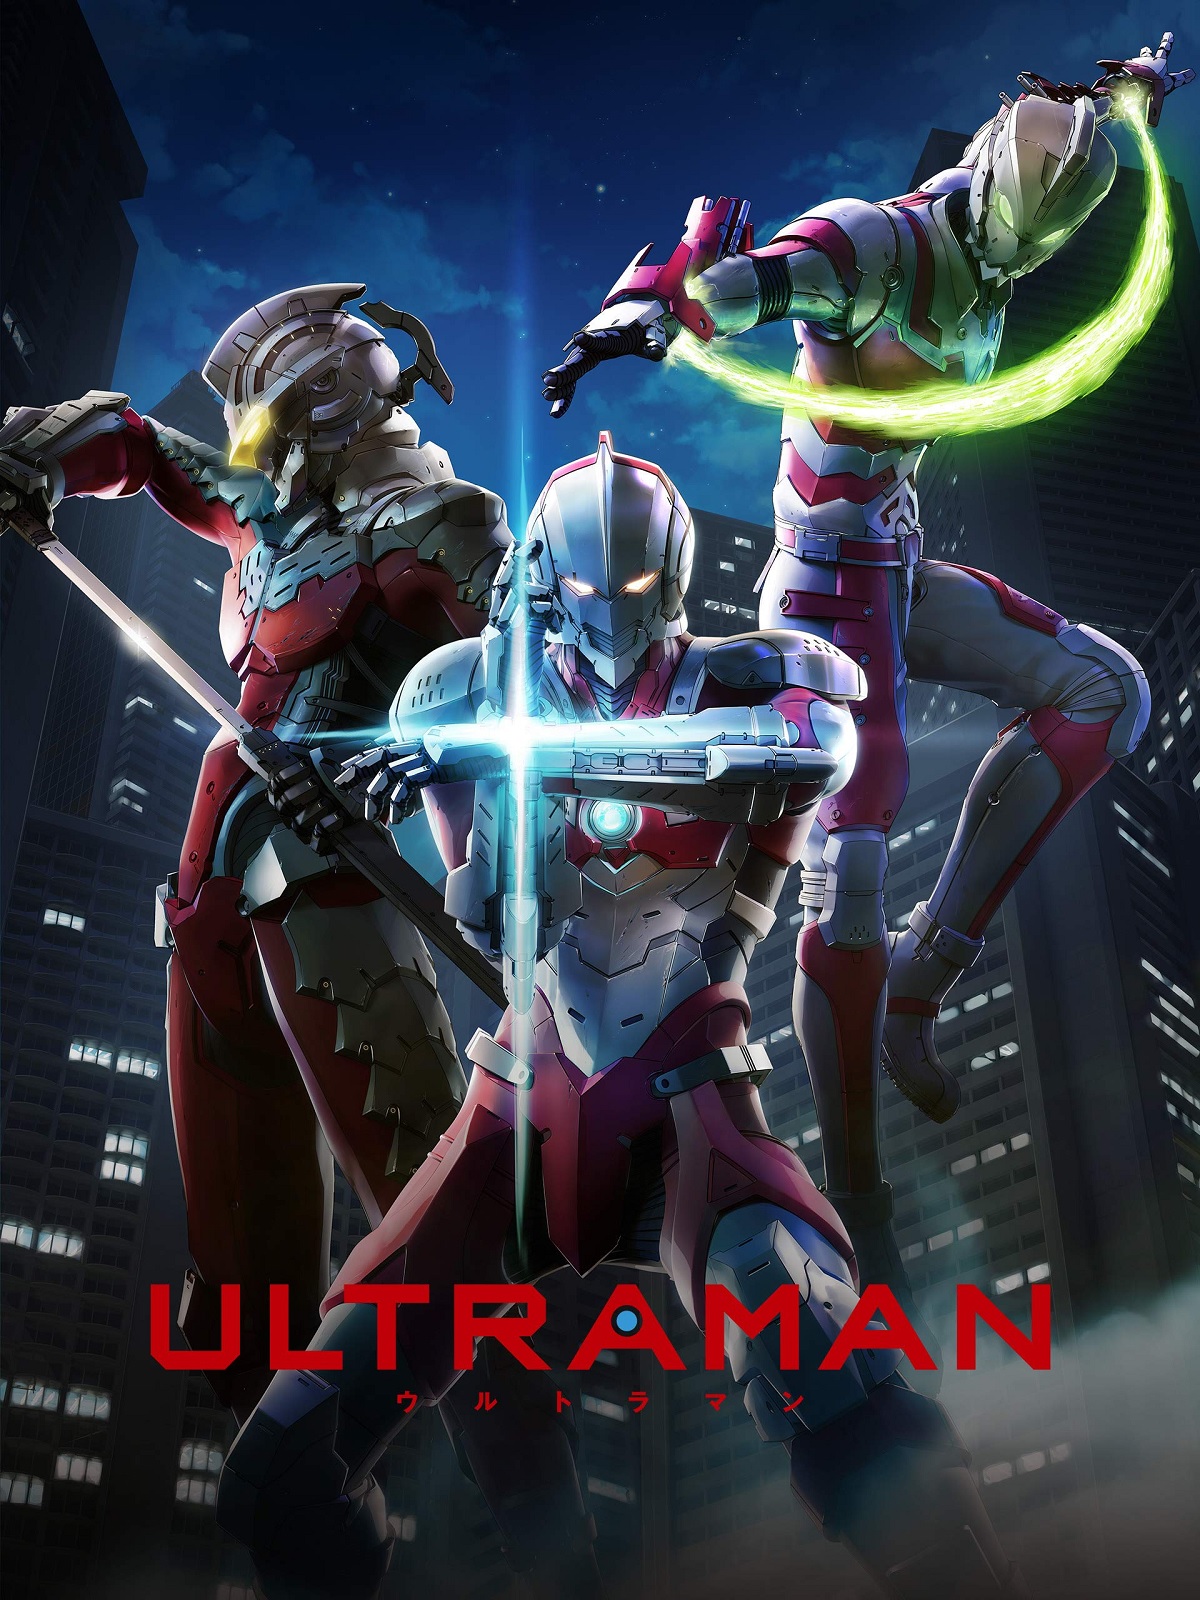 Ultraman ウルトラマン のネタバレ解説 考察まとめ Renote リノート